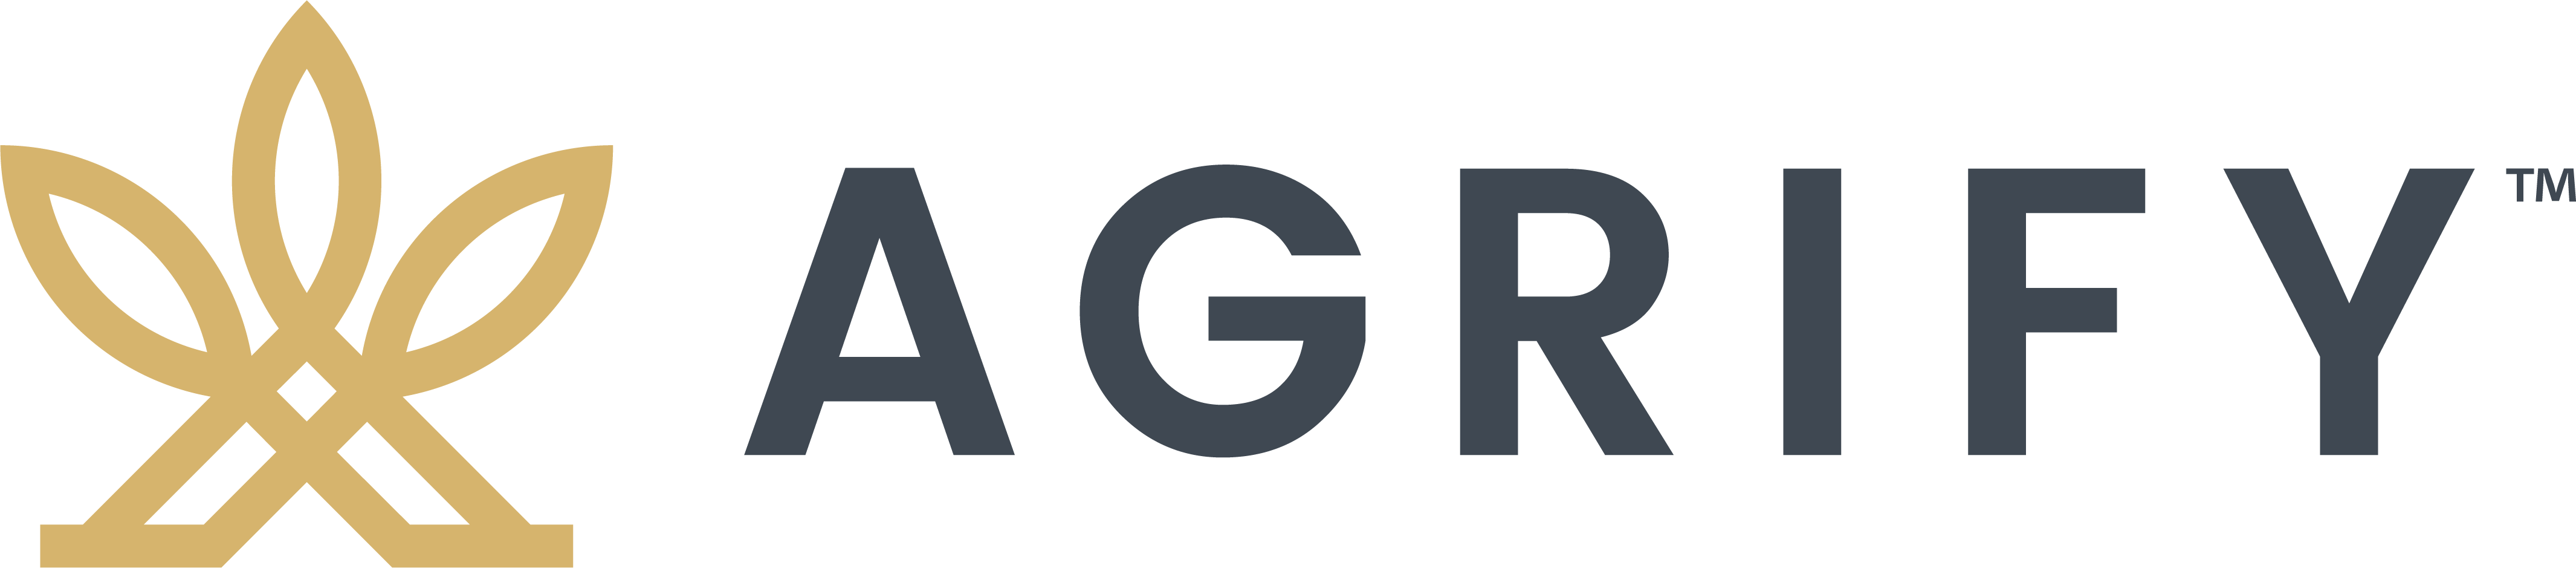 Agrify Corporation logo